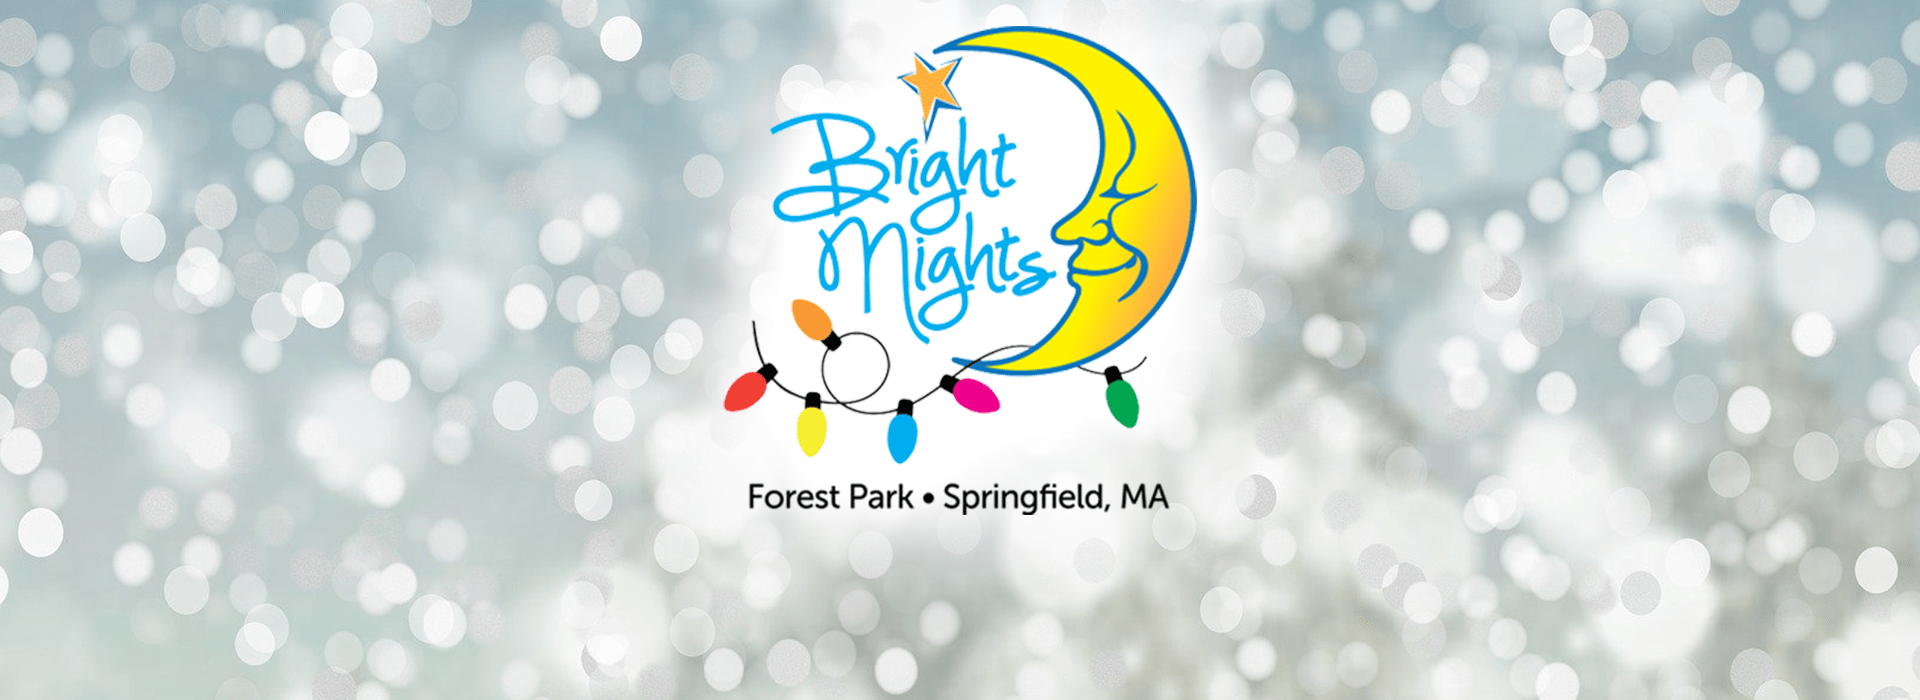 Bright Nights Banner